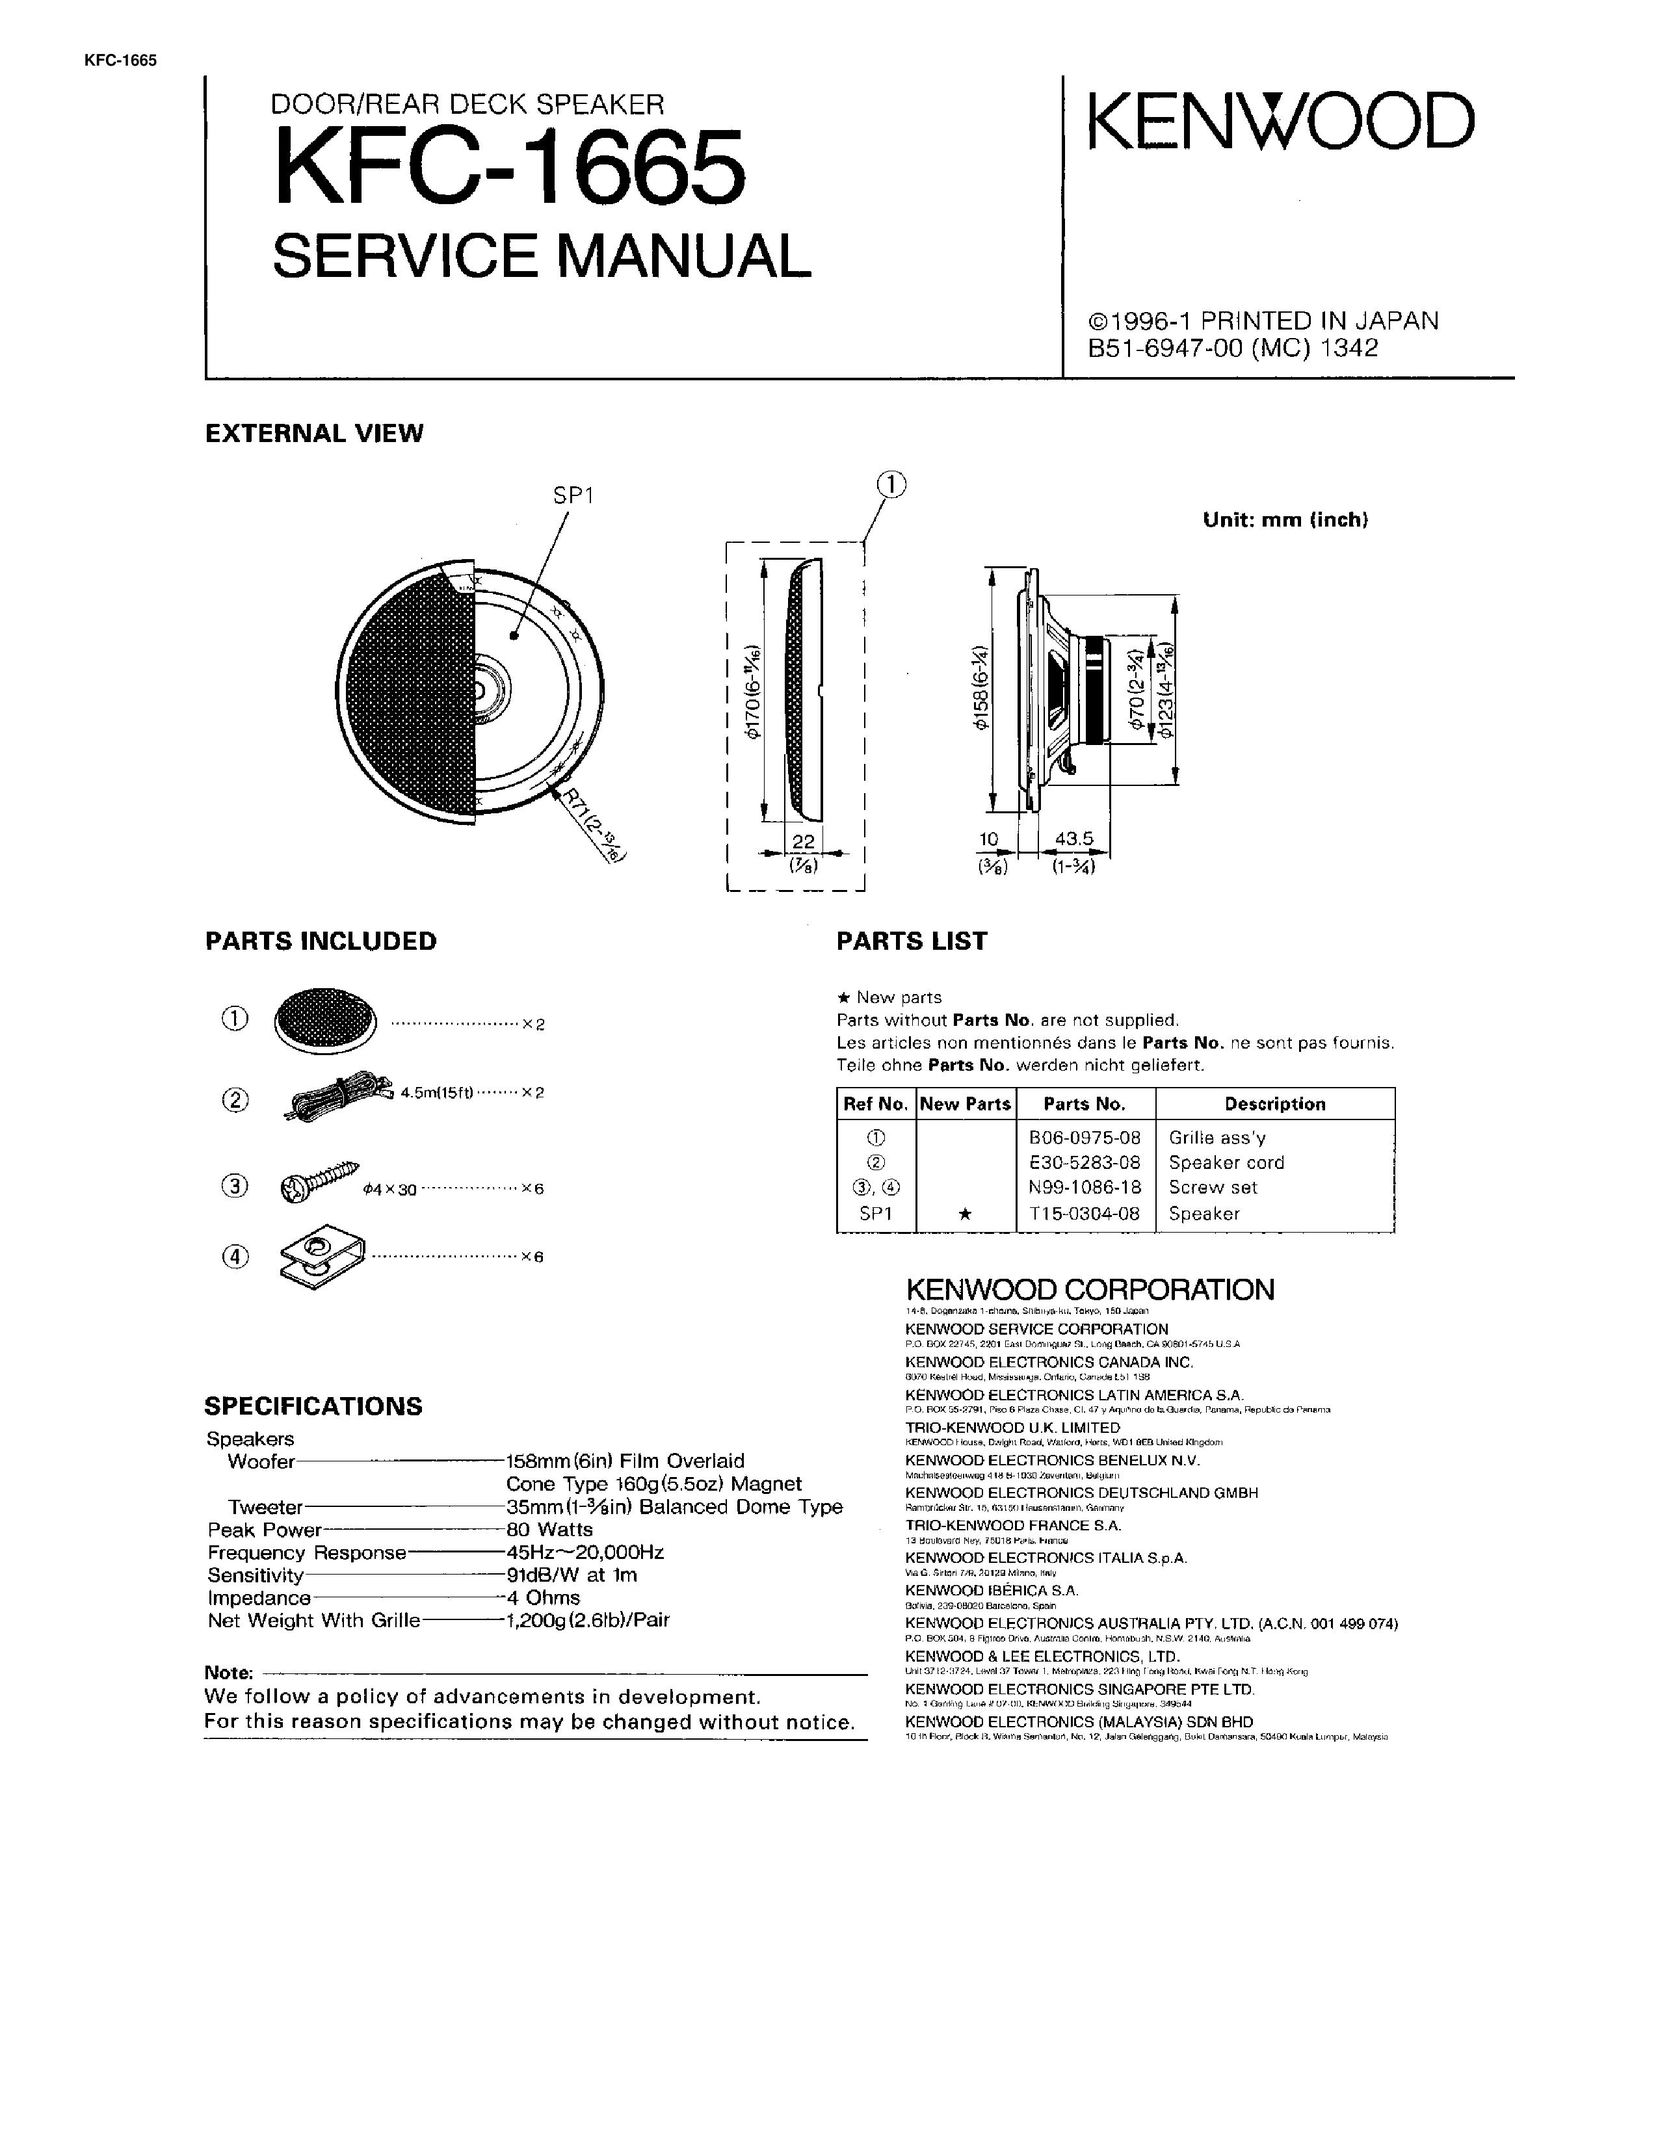 Kenwood KFC-1665 Car Speaker User Manual